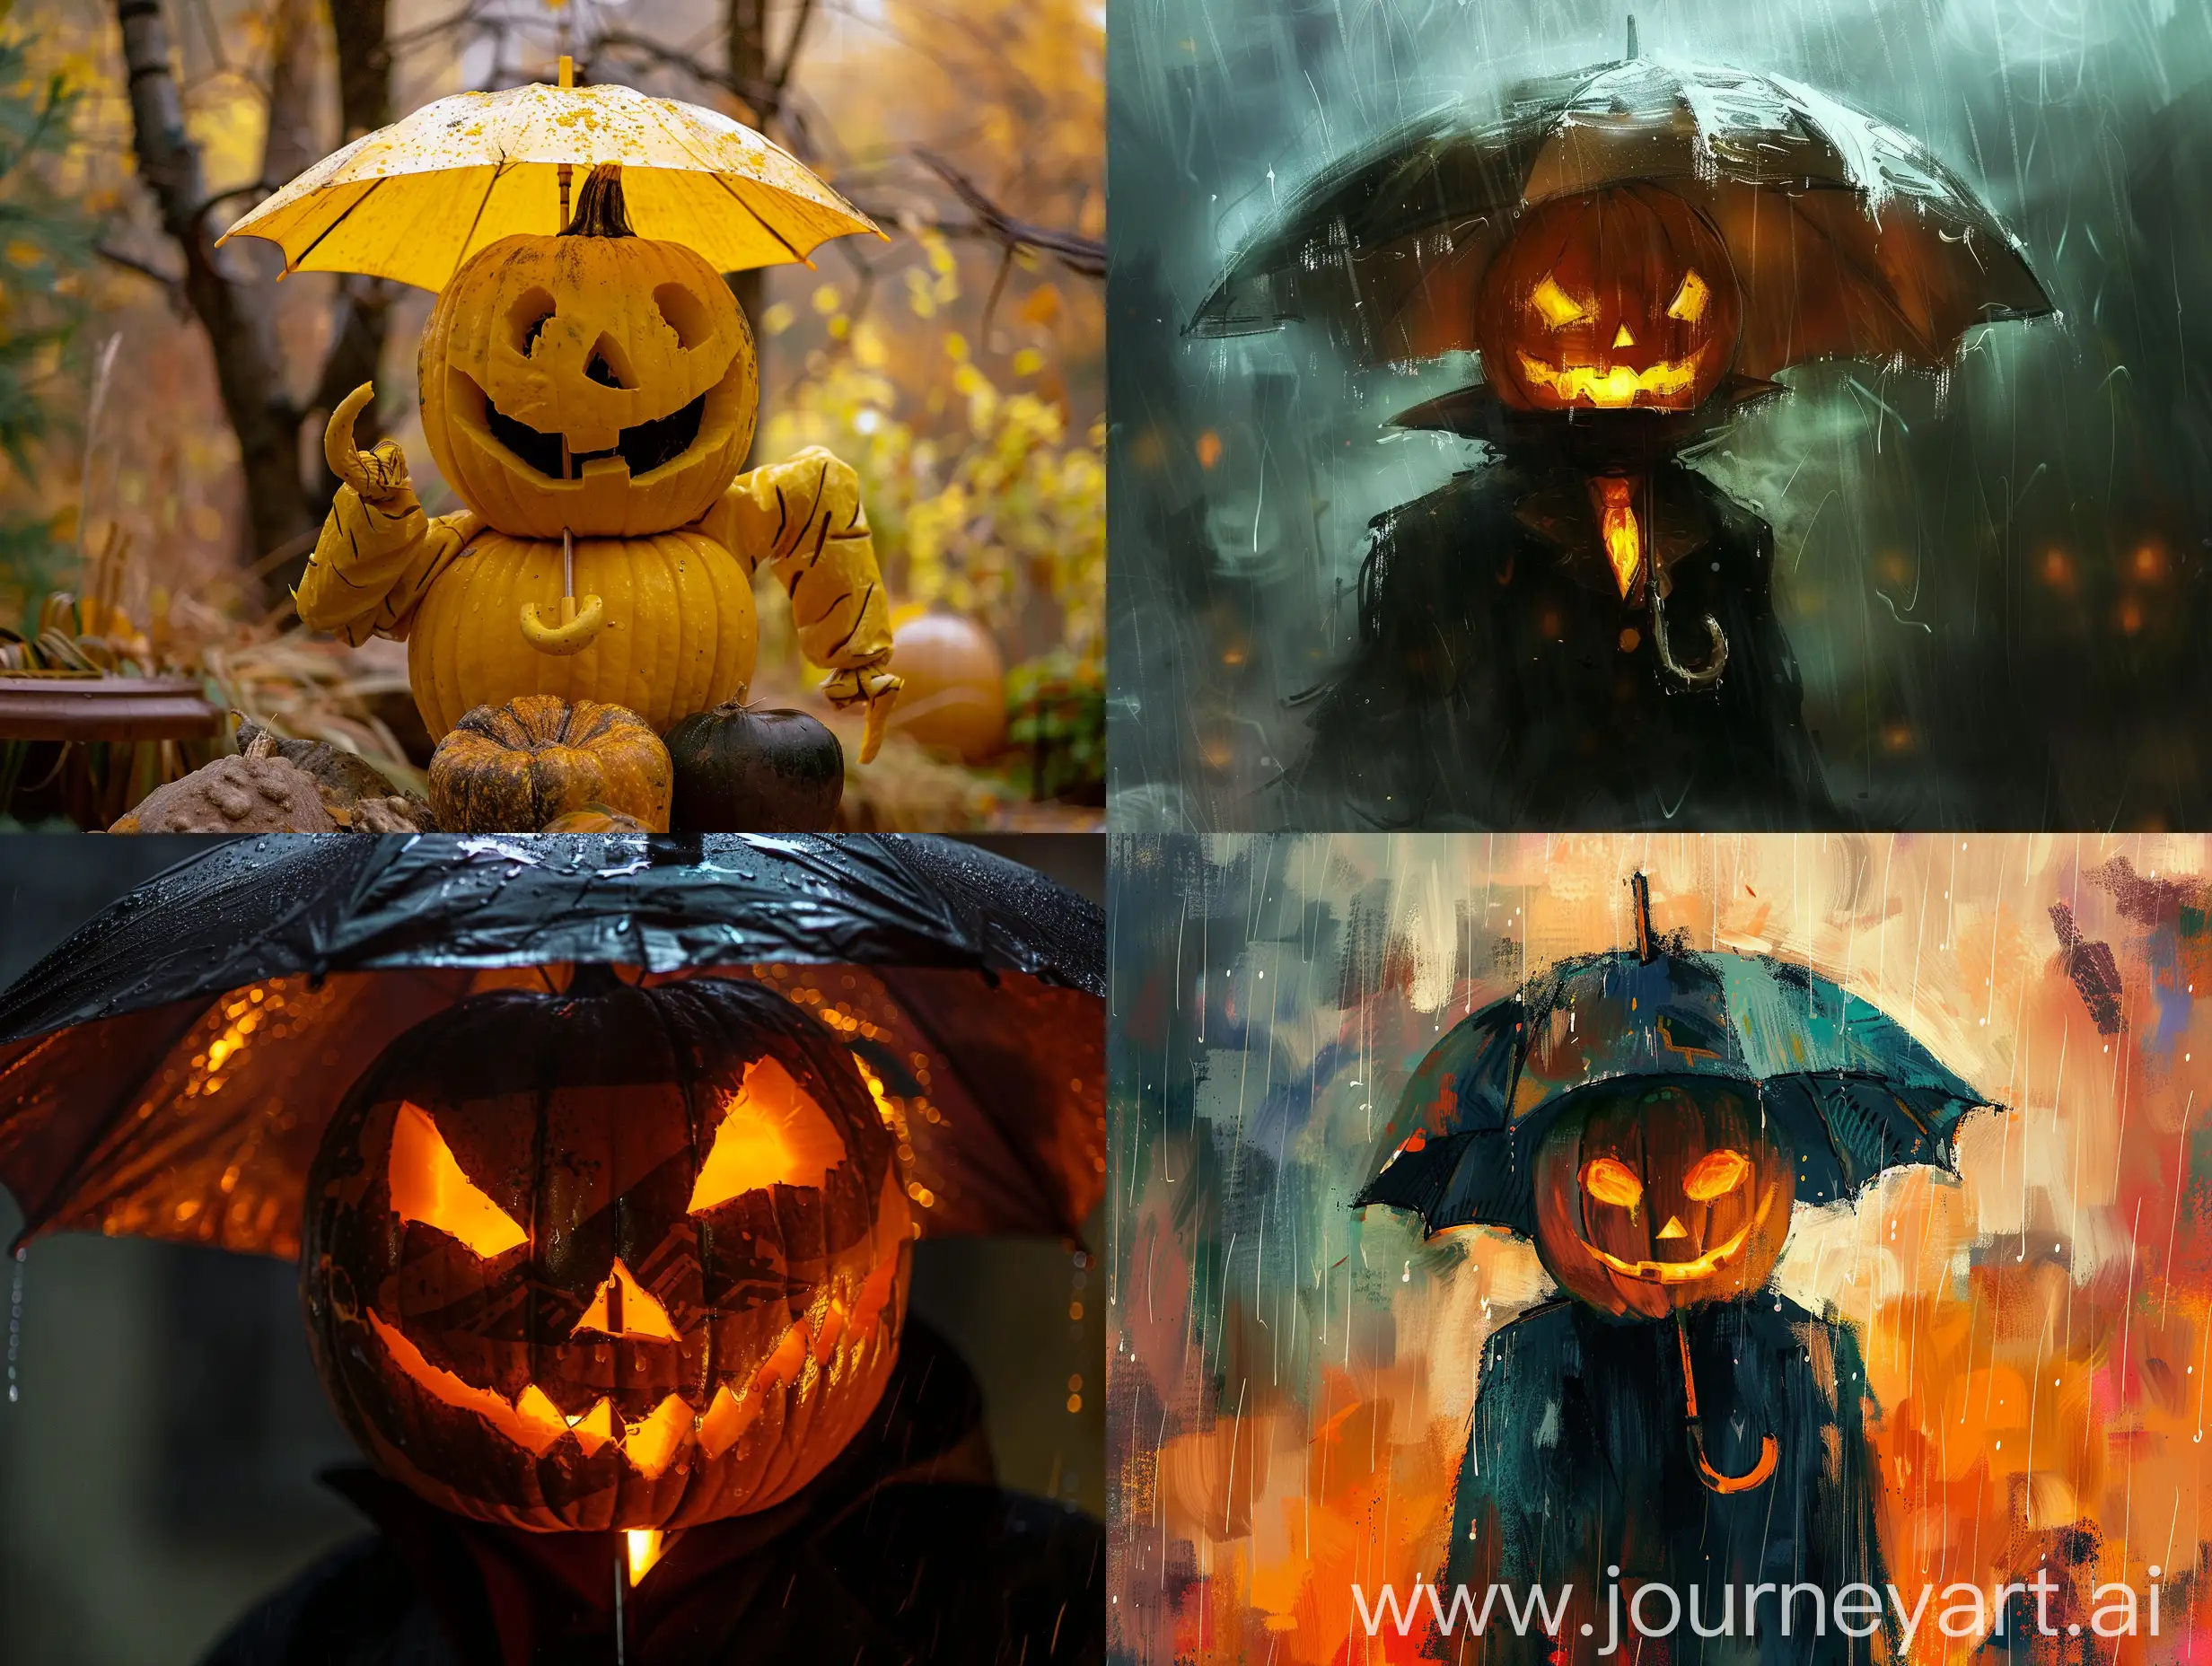 Whimsical-Pumpkin-Man-with-Umbrella-in-Autumn-Setting